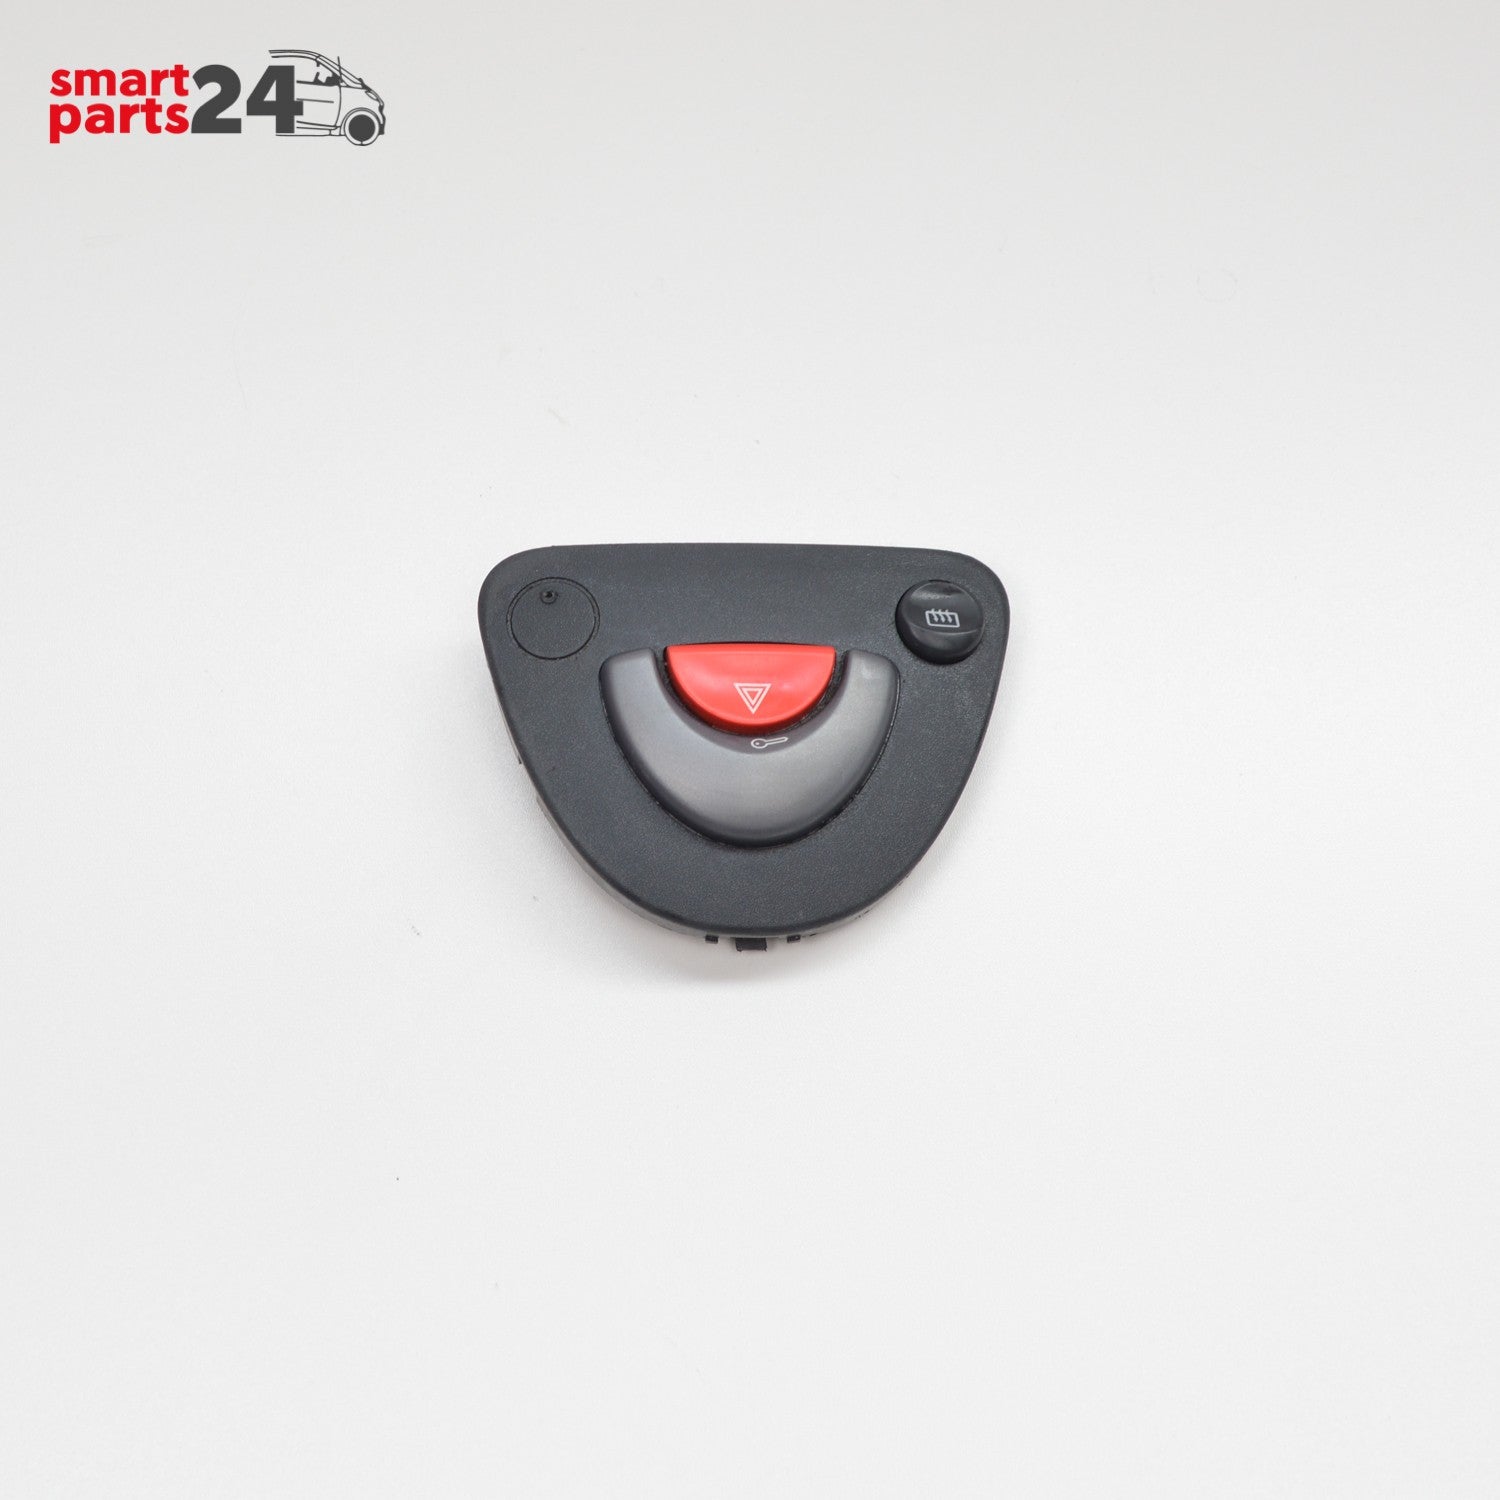 Smart Fortwo 450 safety island hazard warning light switch rear window Q0001166V013 (used)